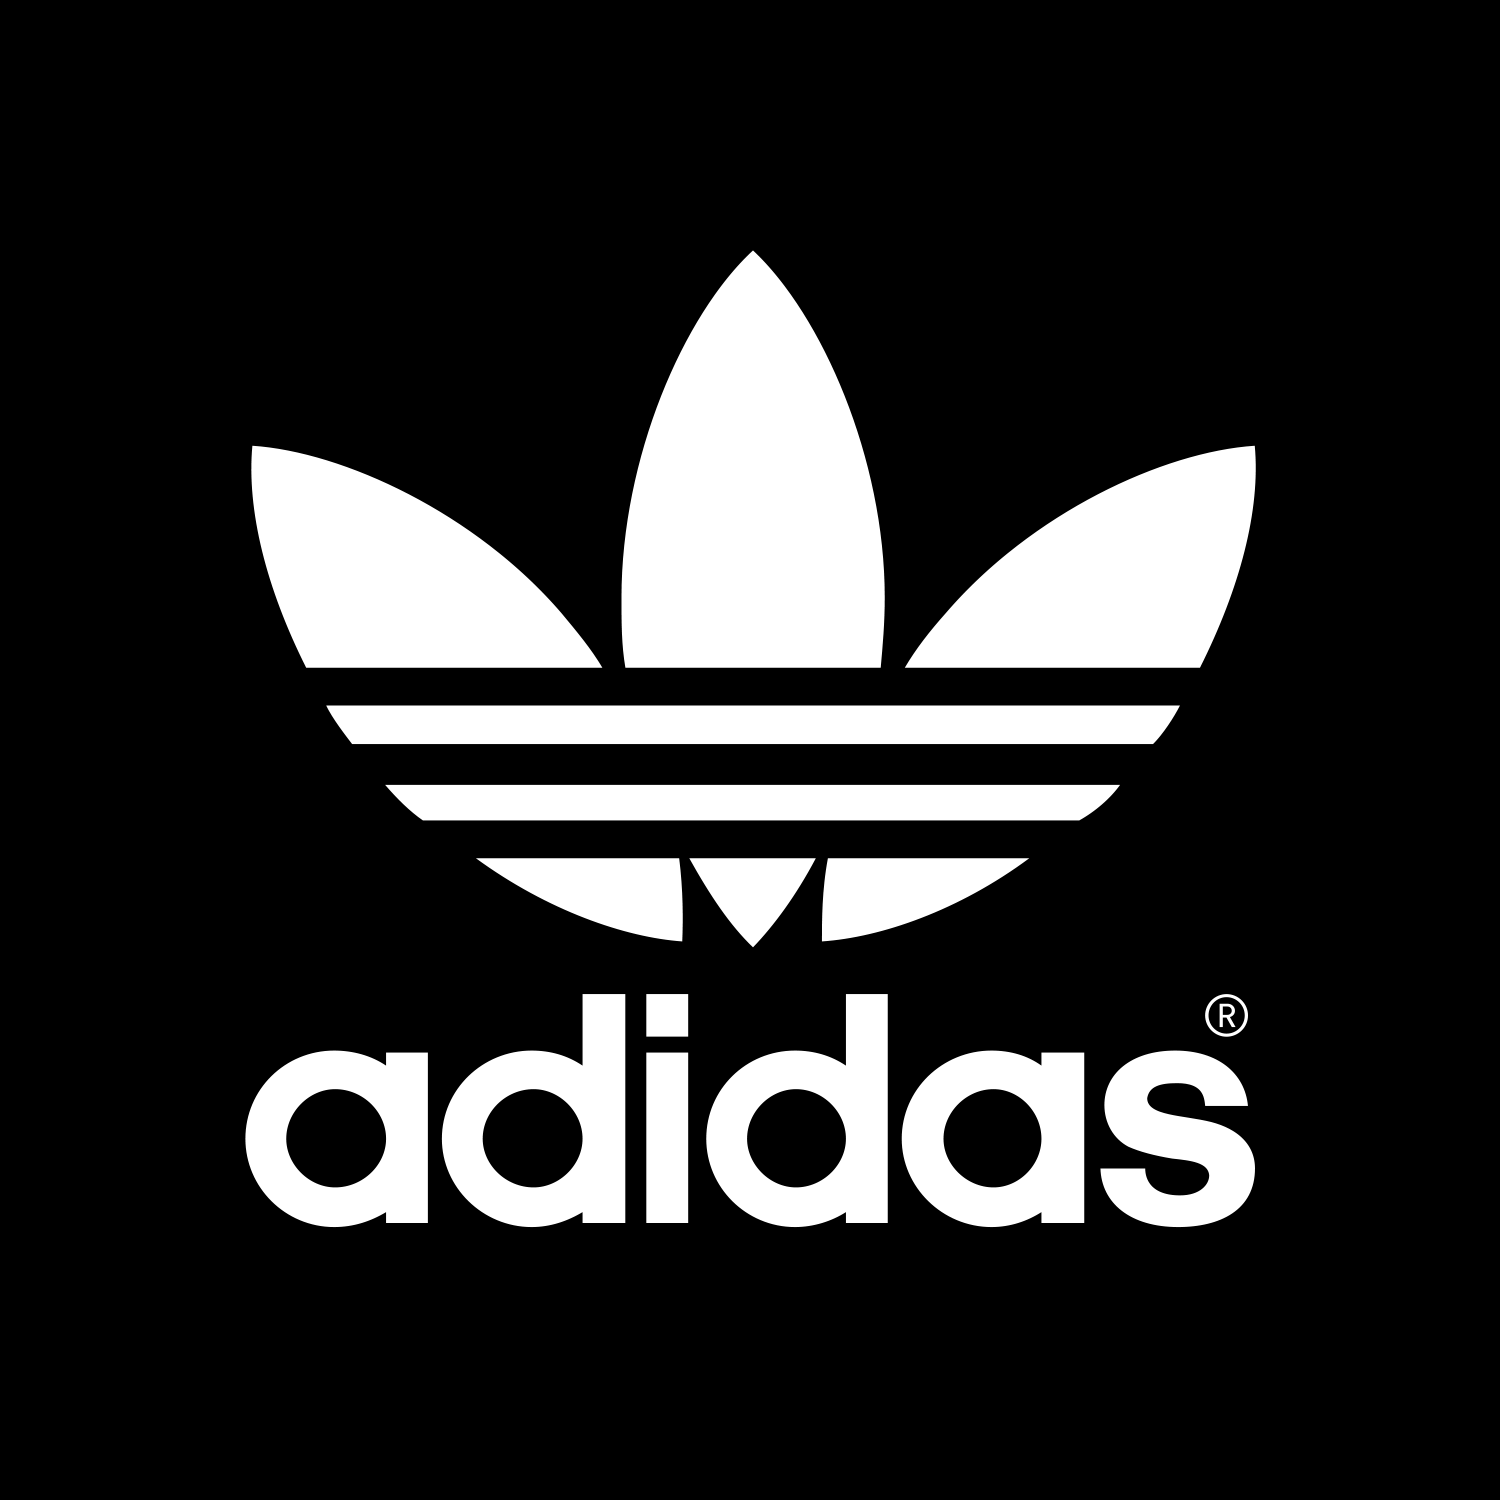 Adidas App Logo - adidas unveils new app